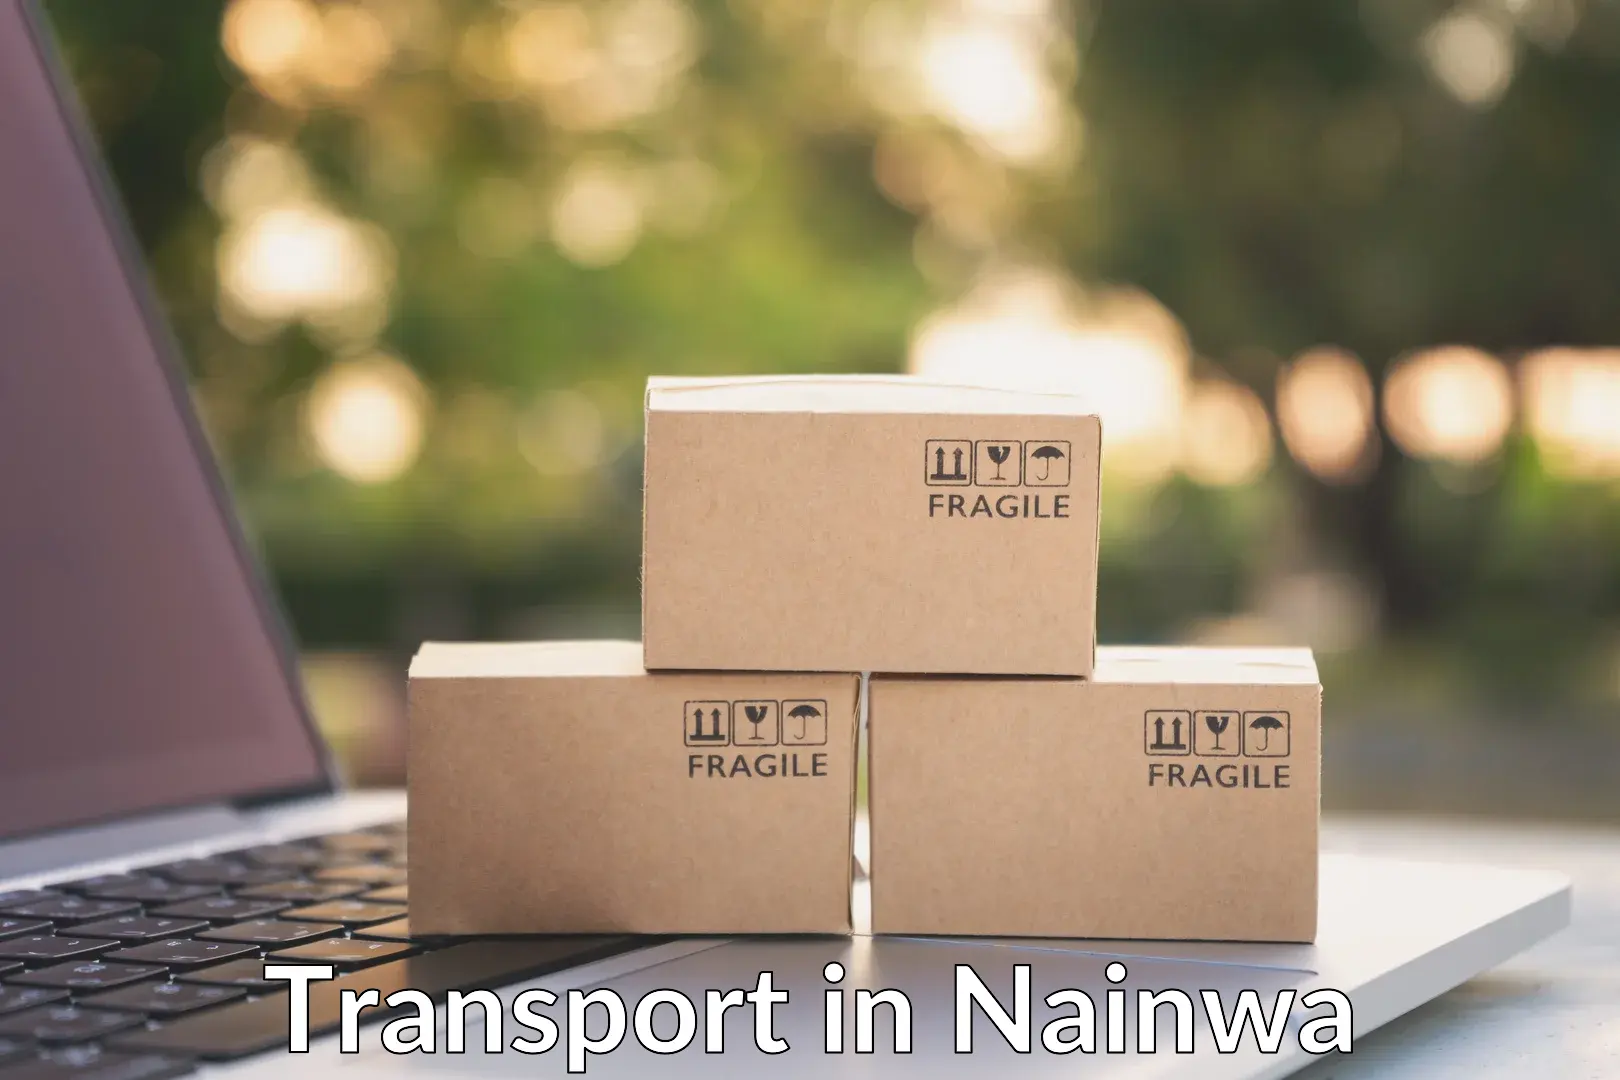 Two wheeler parcel service in Nainwa